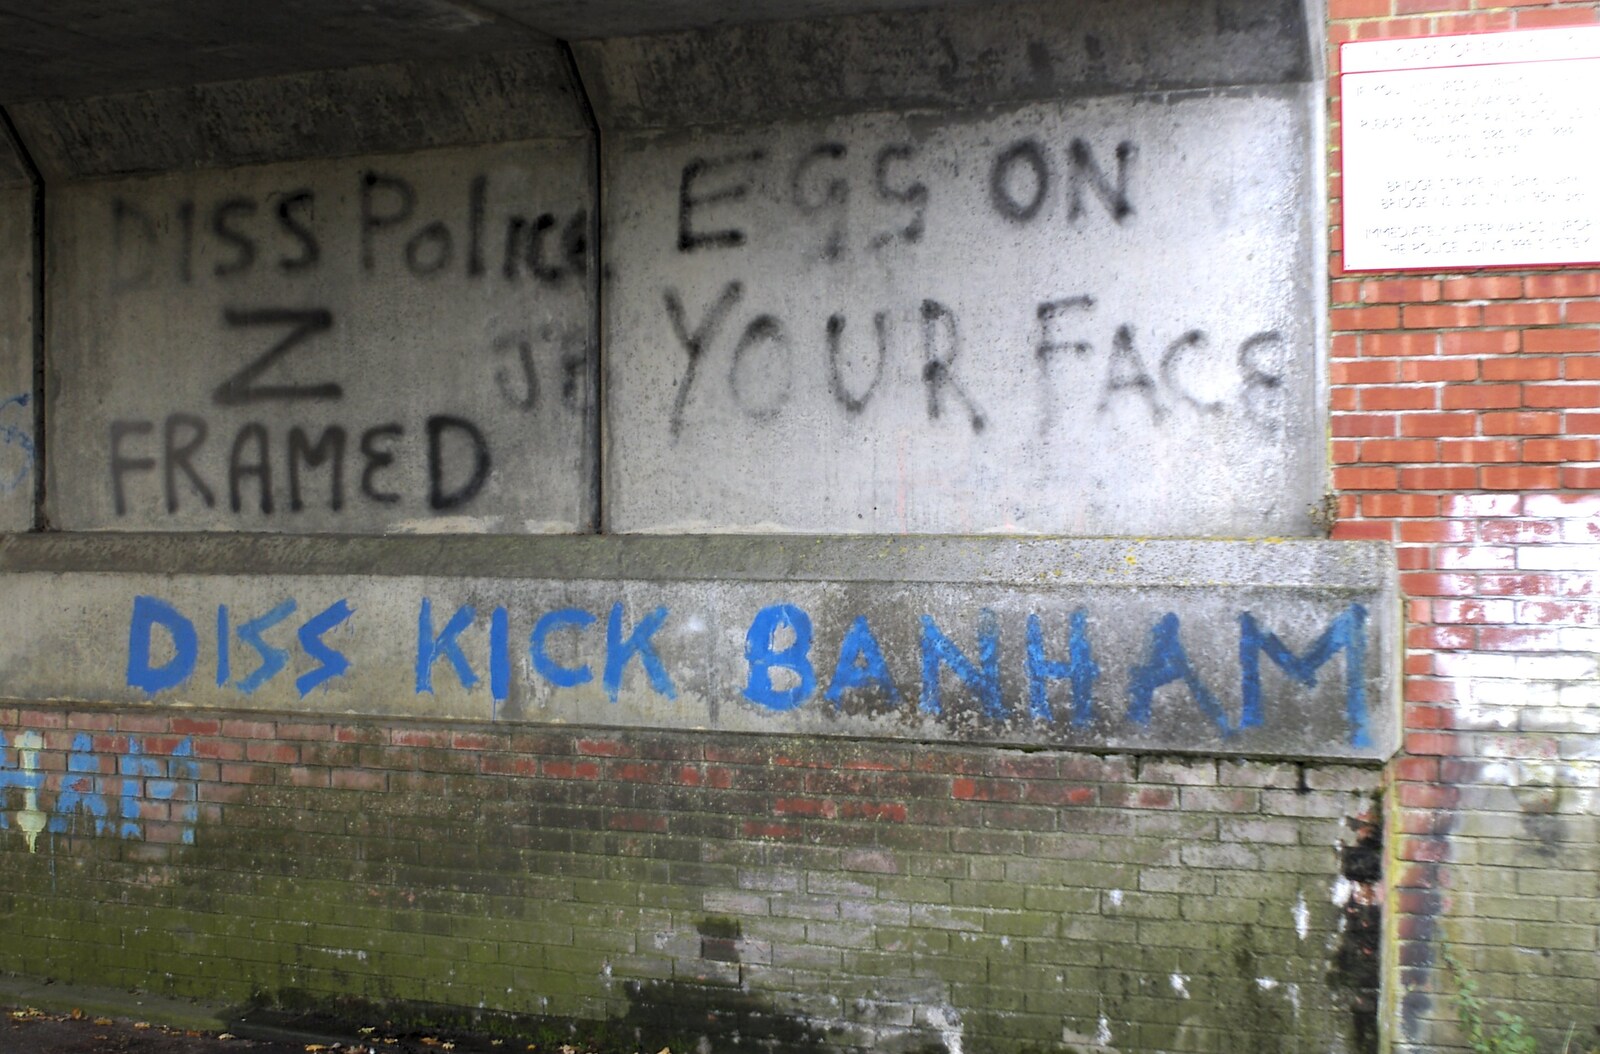 Under-the-railway-bridge graffiti from Random Scenes of Diss, Norfolk - 20th November 2004